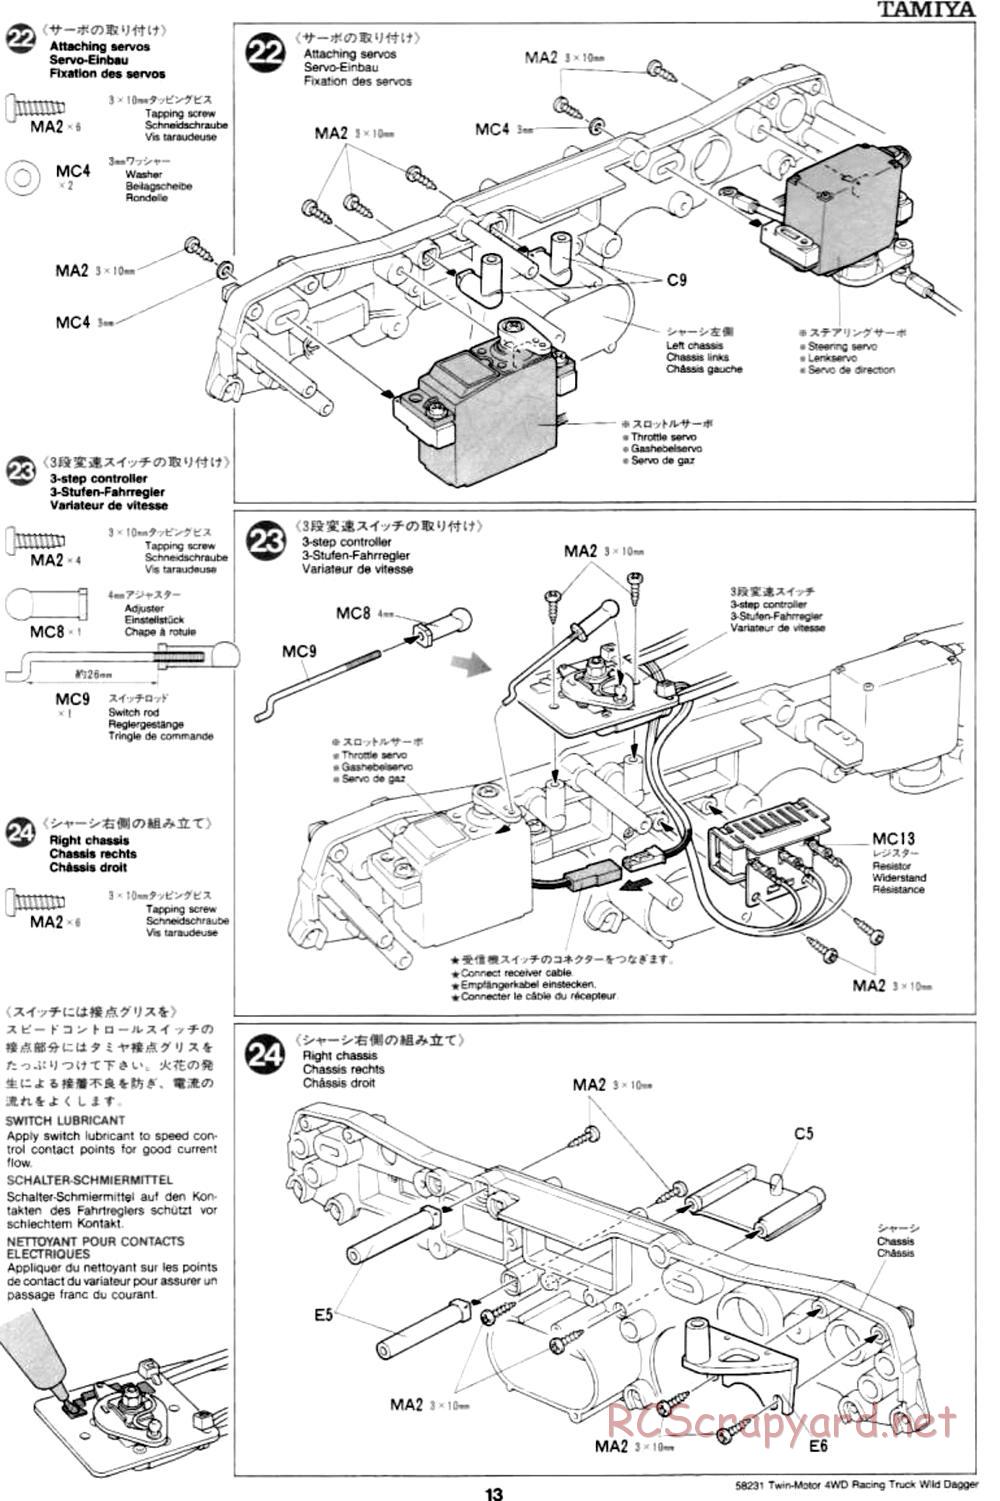 Tamiya - Wild Dagger - WR-01 Chassis - Manual - Page 13